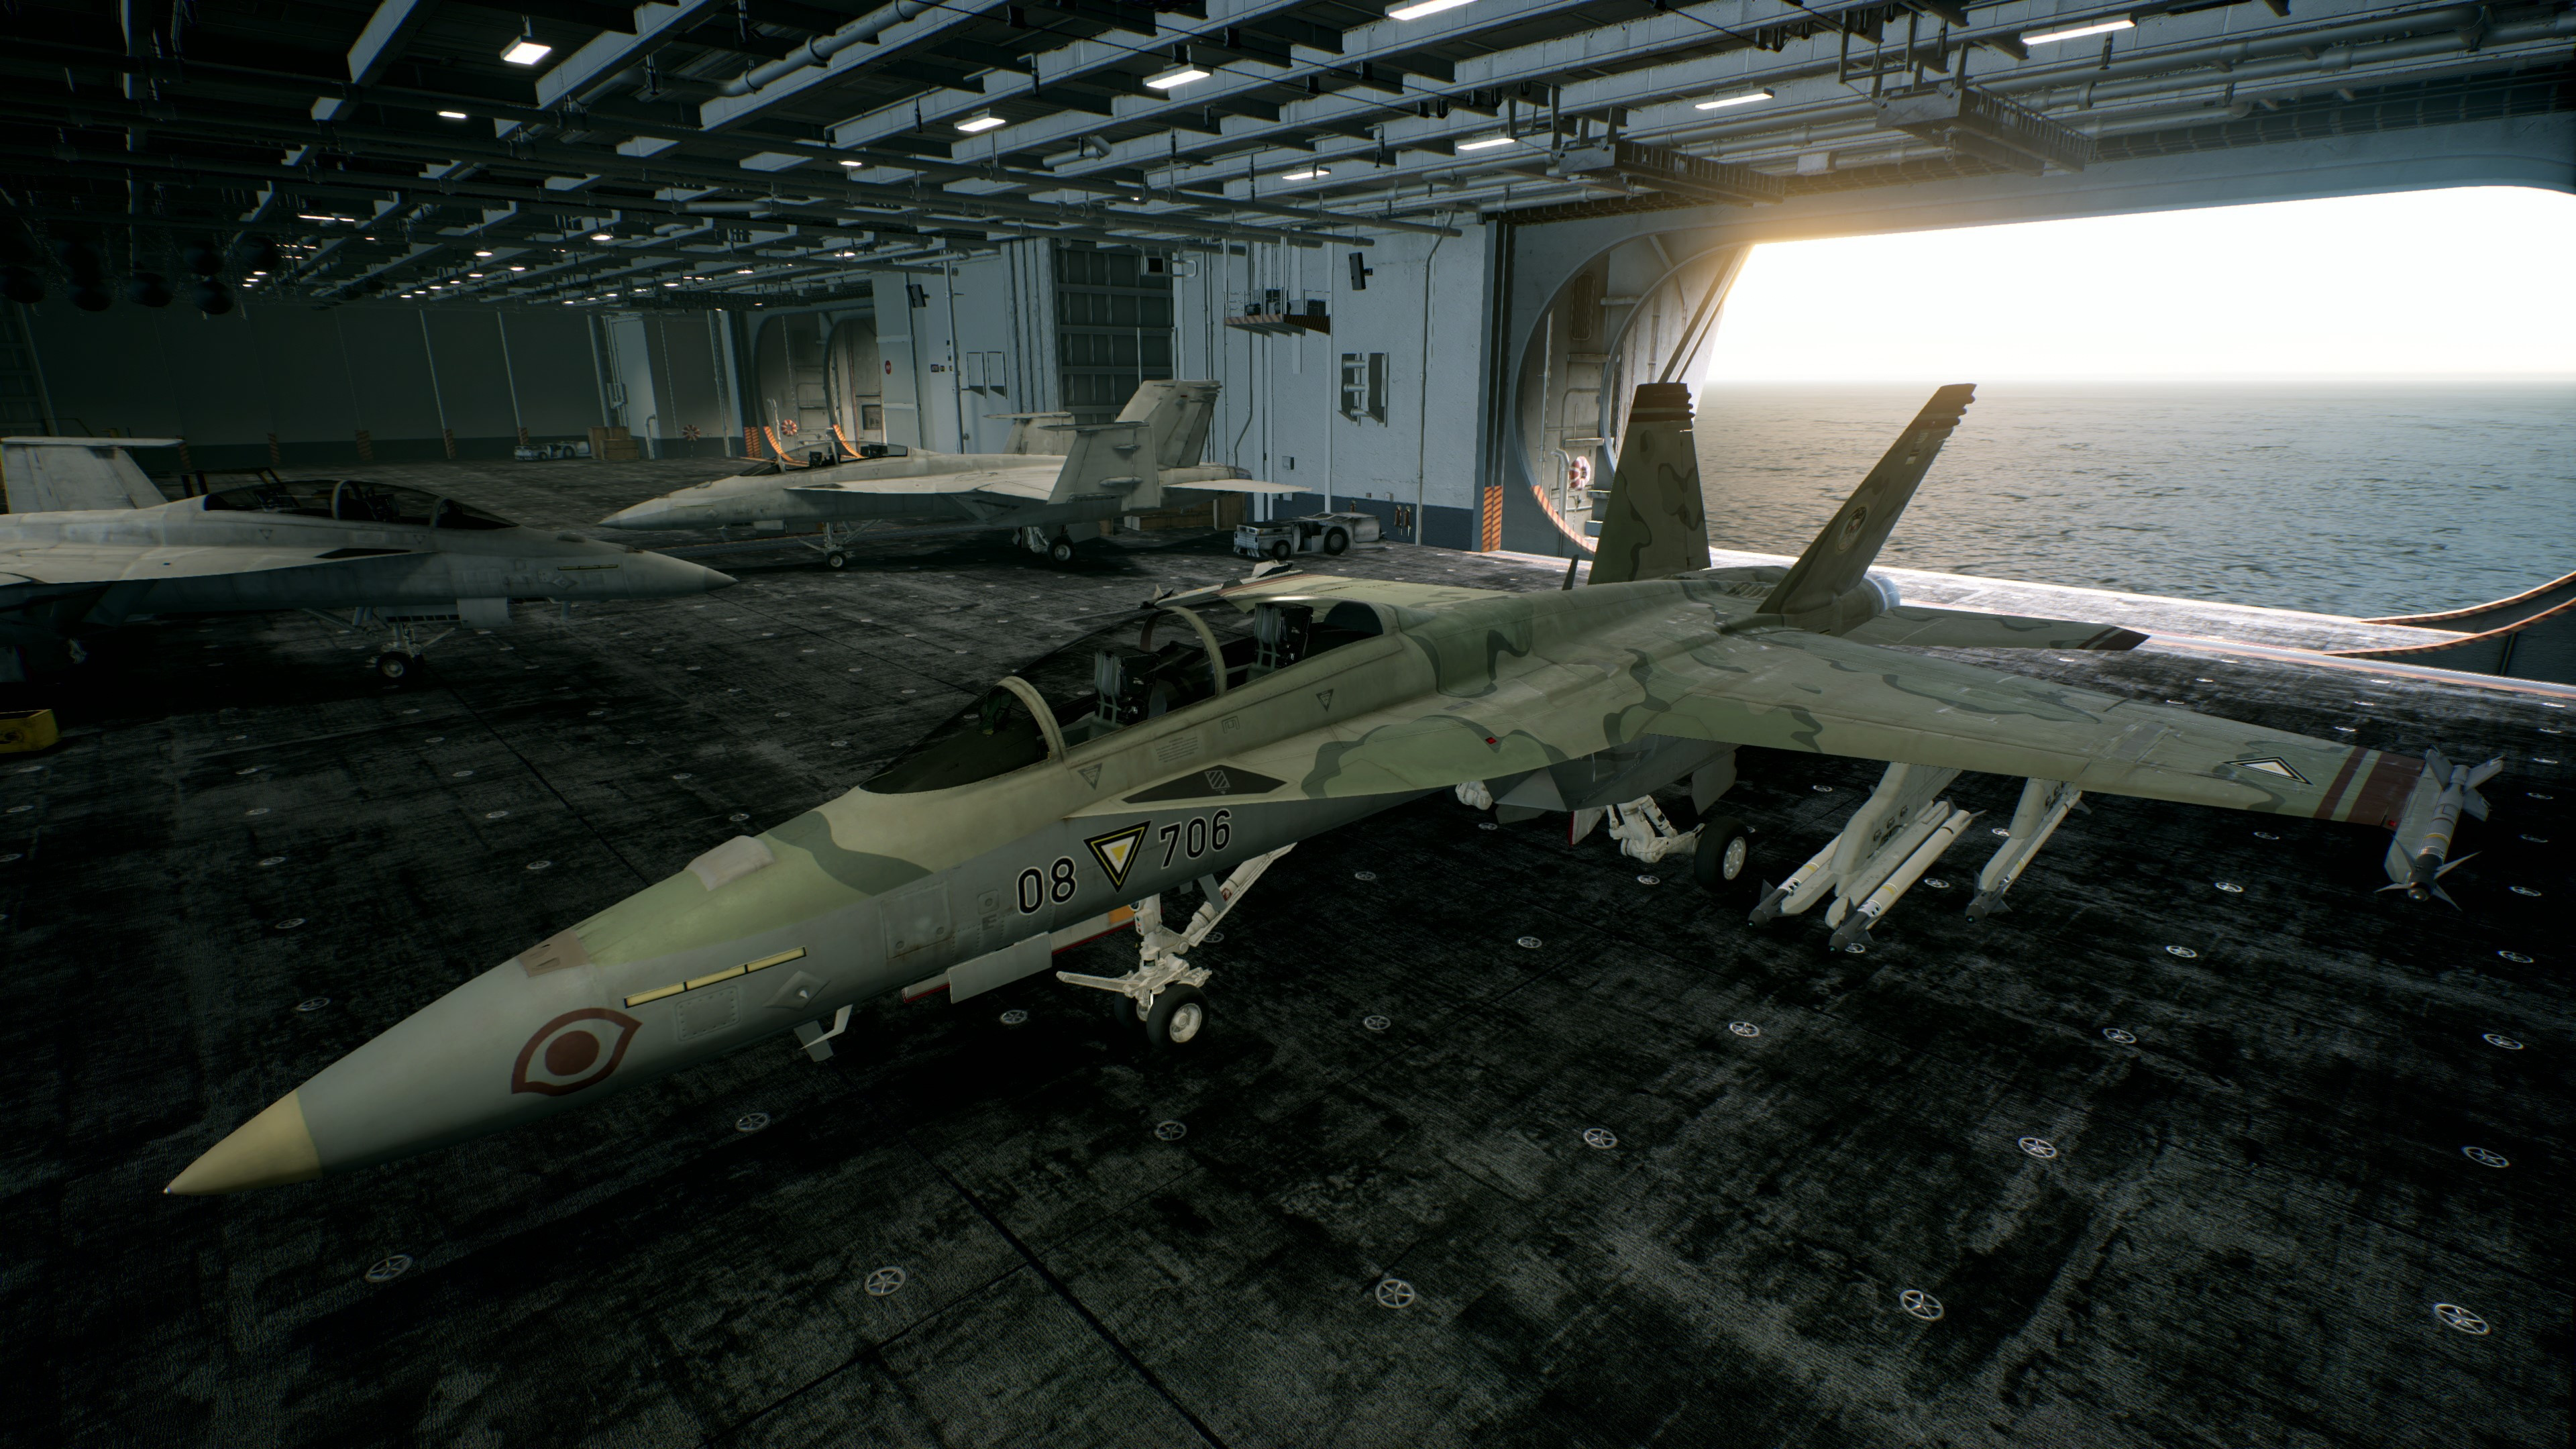 ACE COMBAT™ 7: SKIES UNKNOWN 25th Anniversary DLC - Experimental Aircraft  Series Set · SteamDB